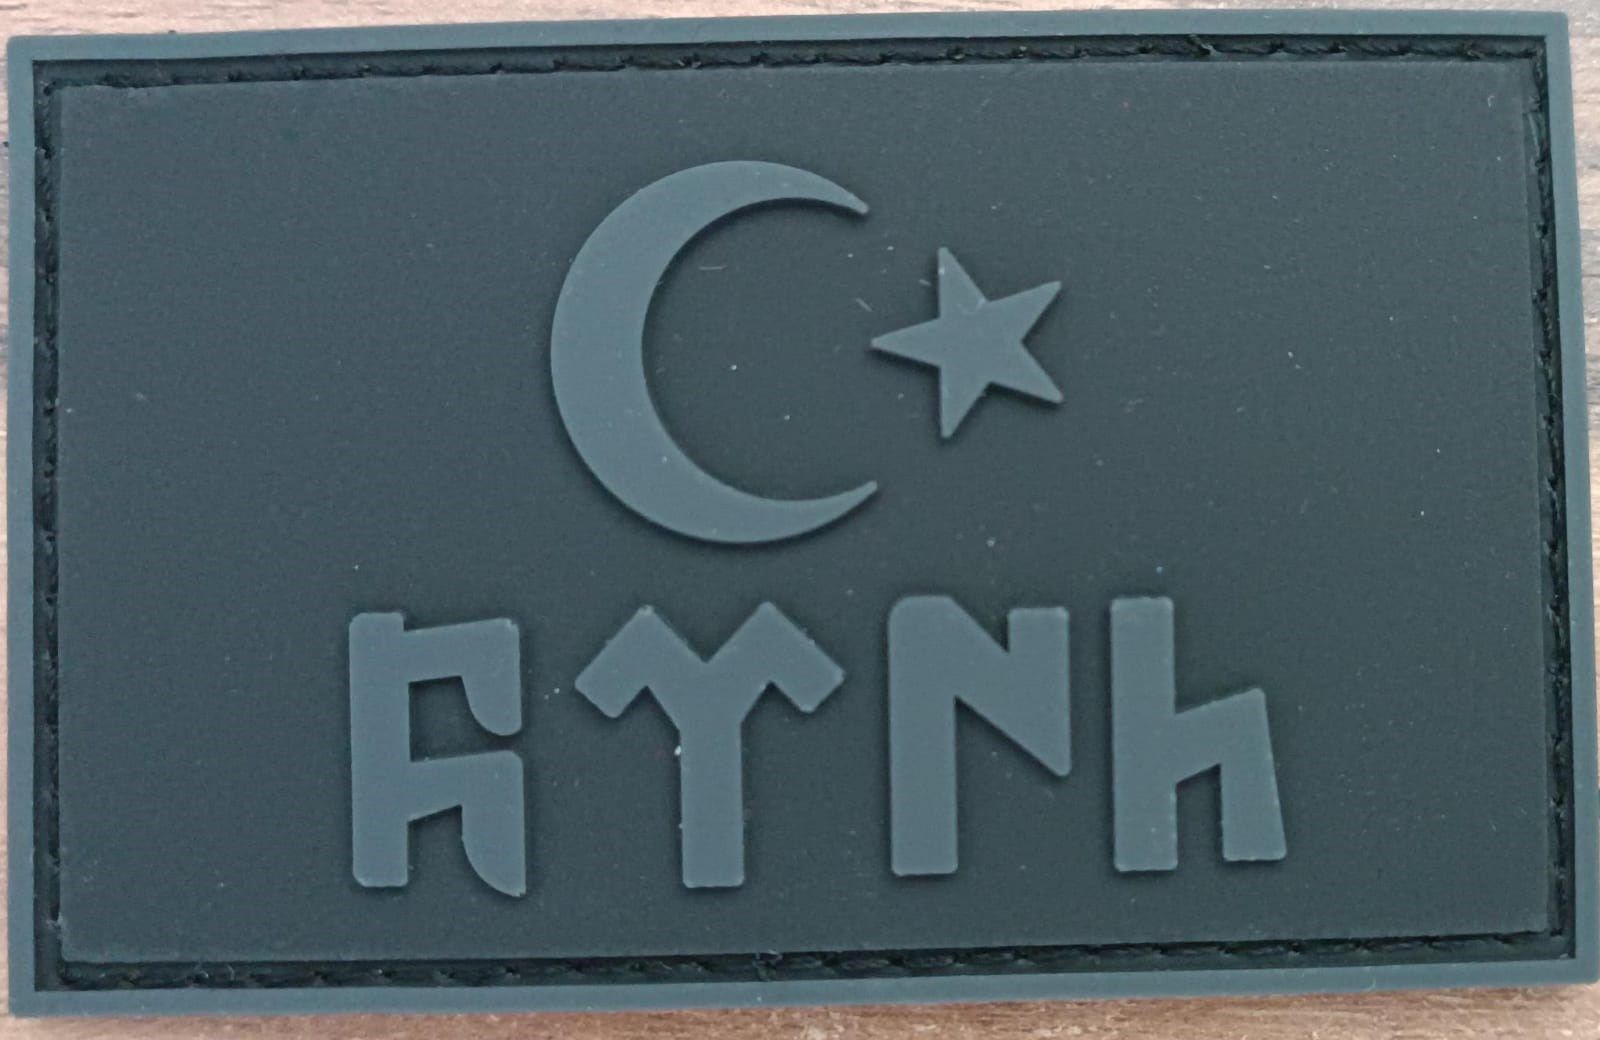 Türk Siyah Plastik Patch